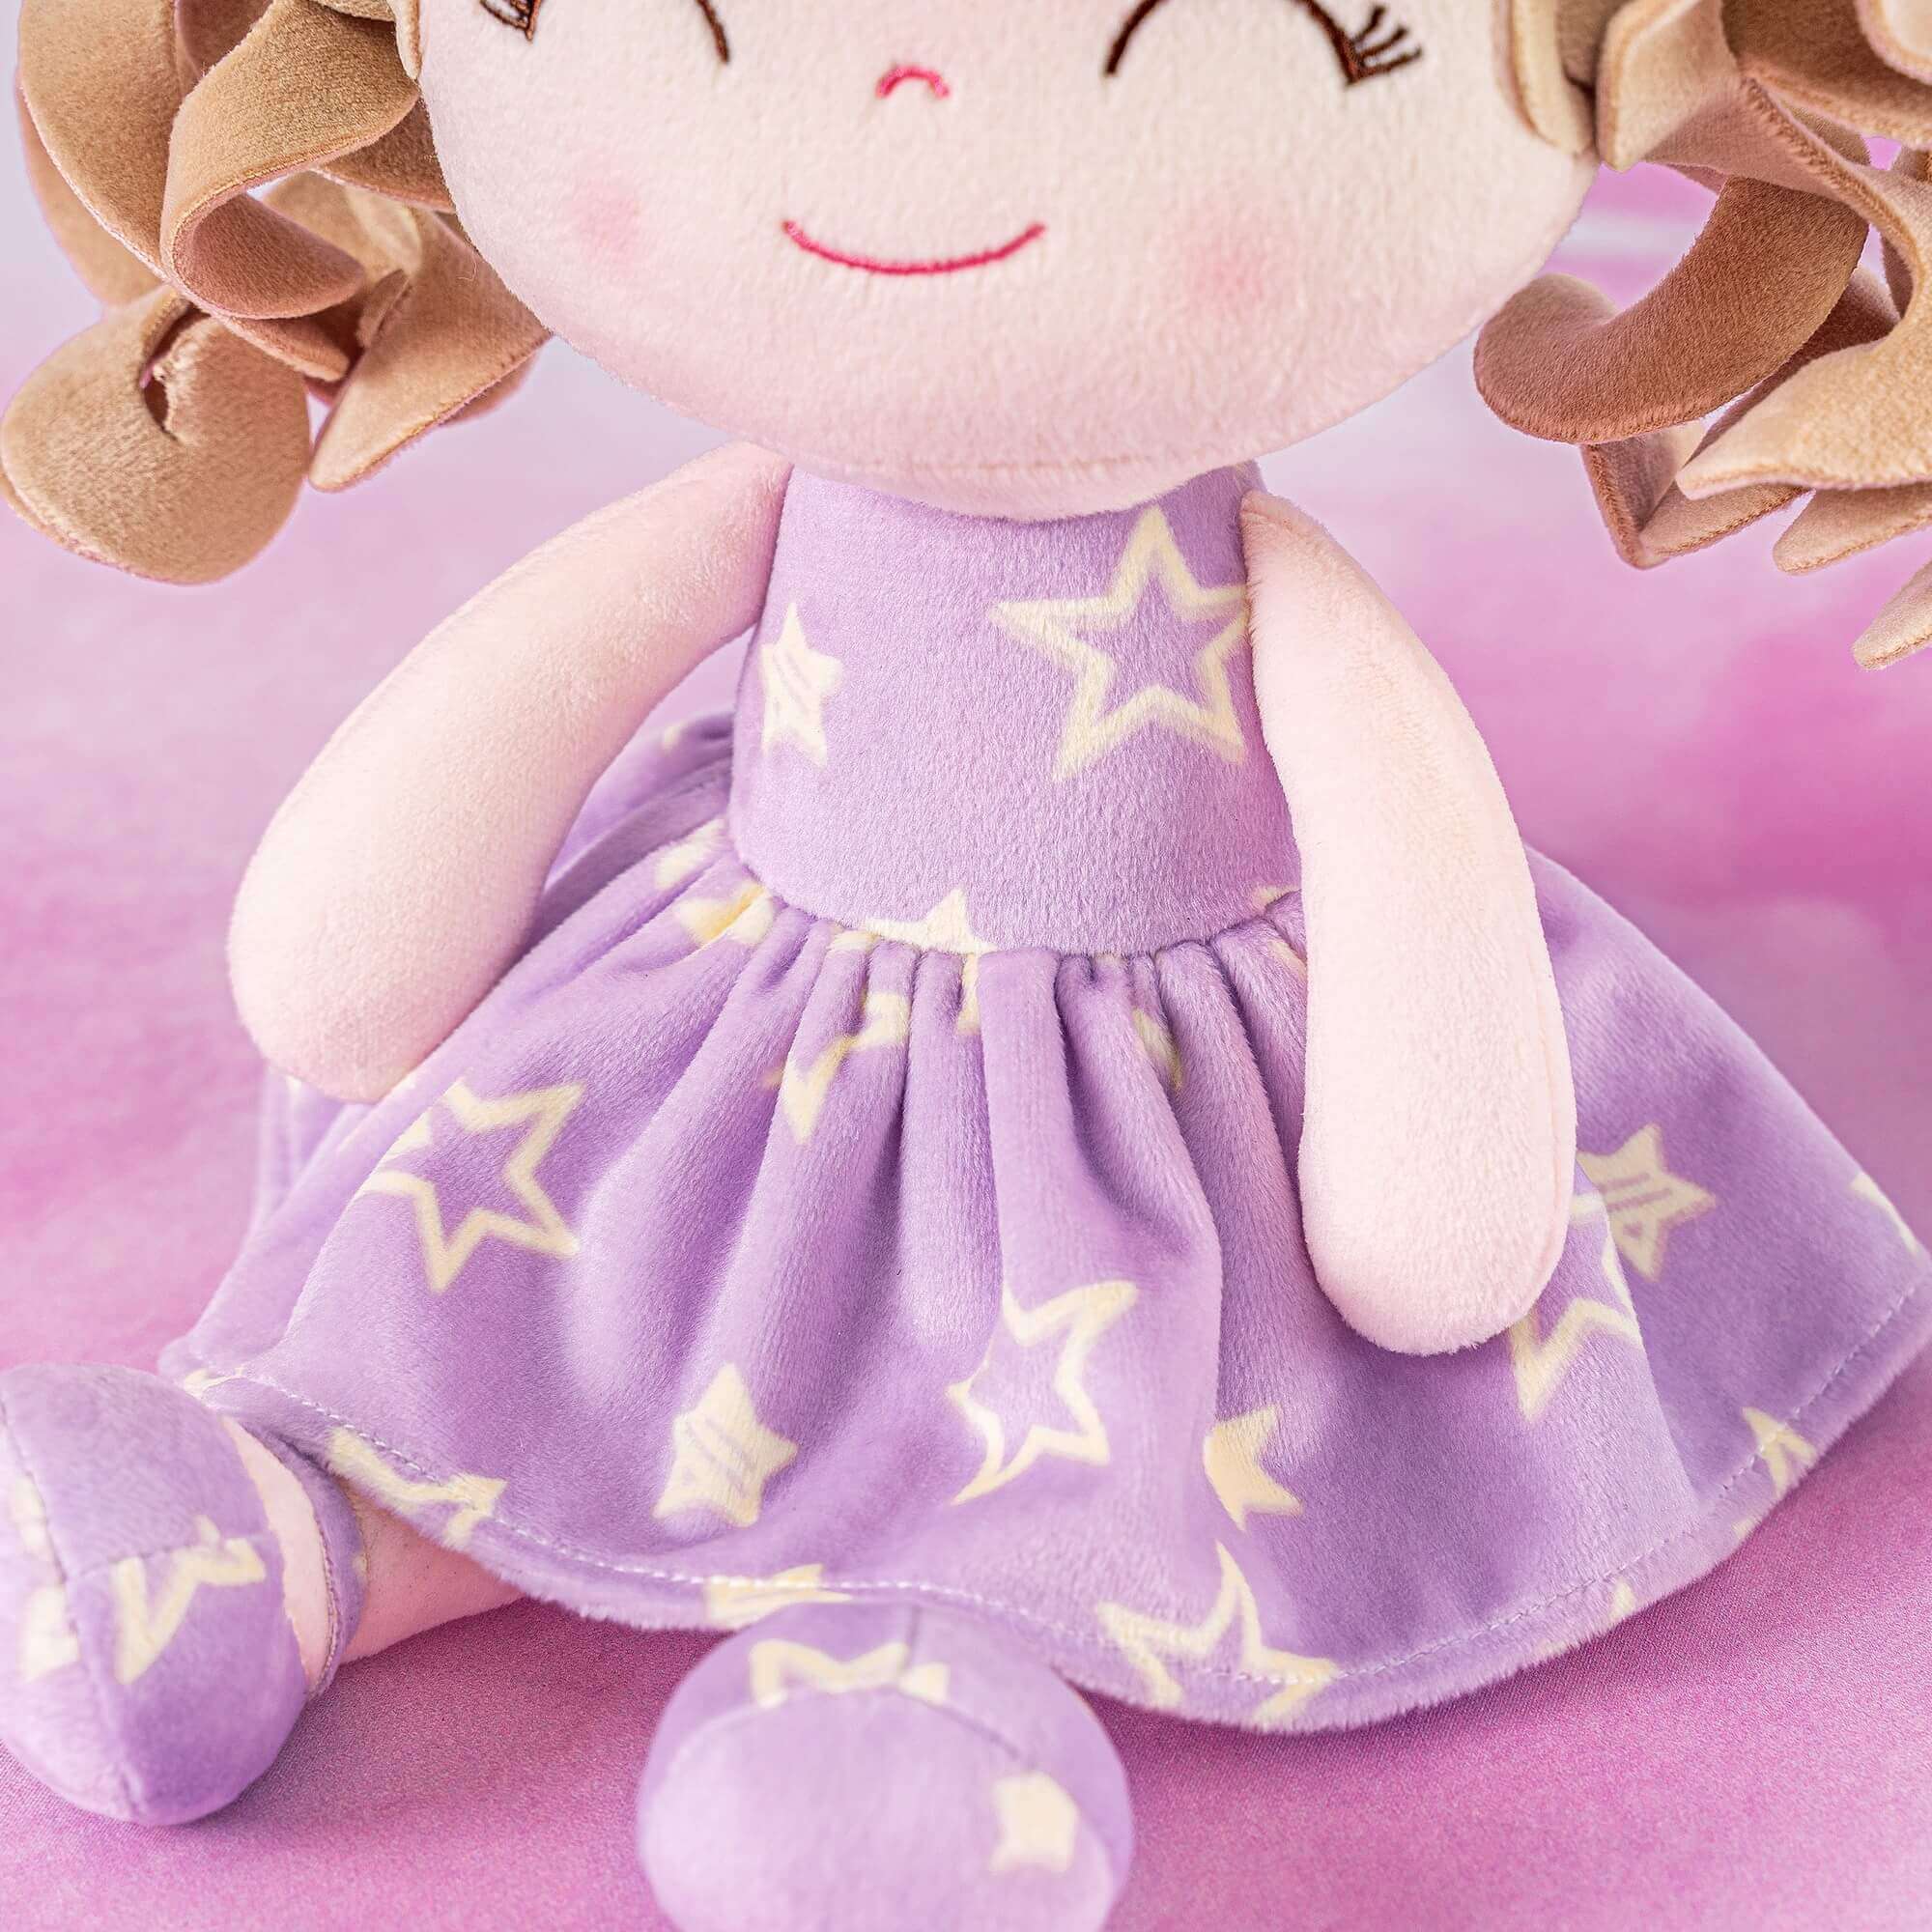 Gloveleya 12-inch Curly Hair Baby Star Dress Doll Series